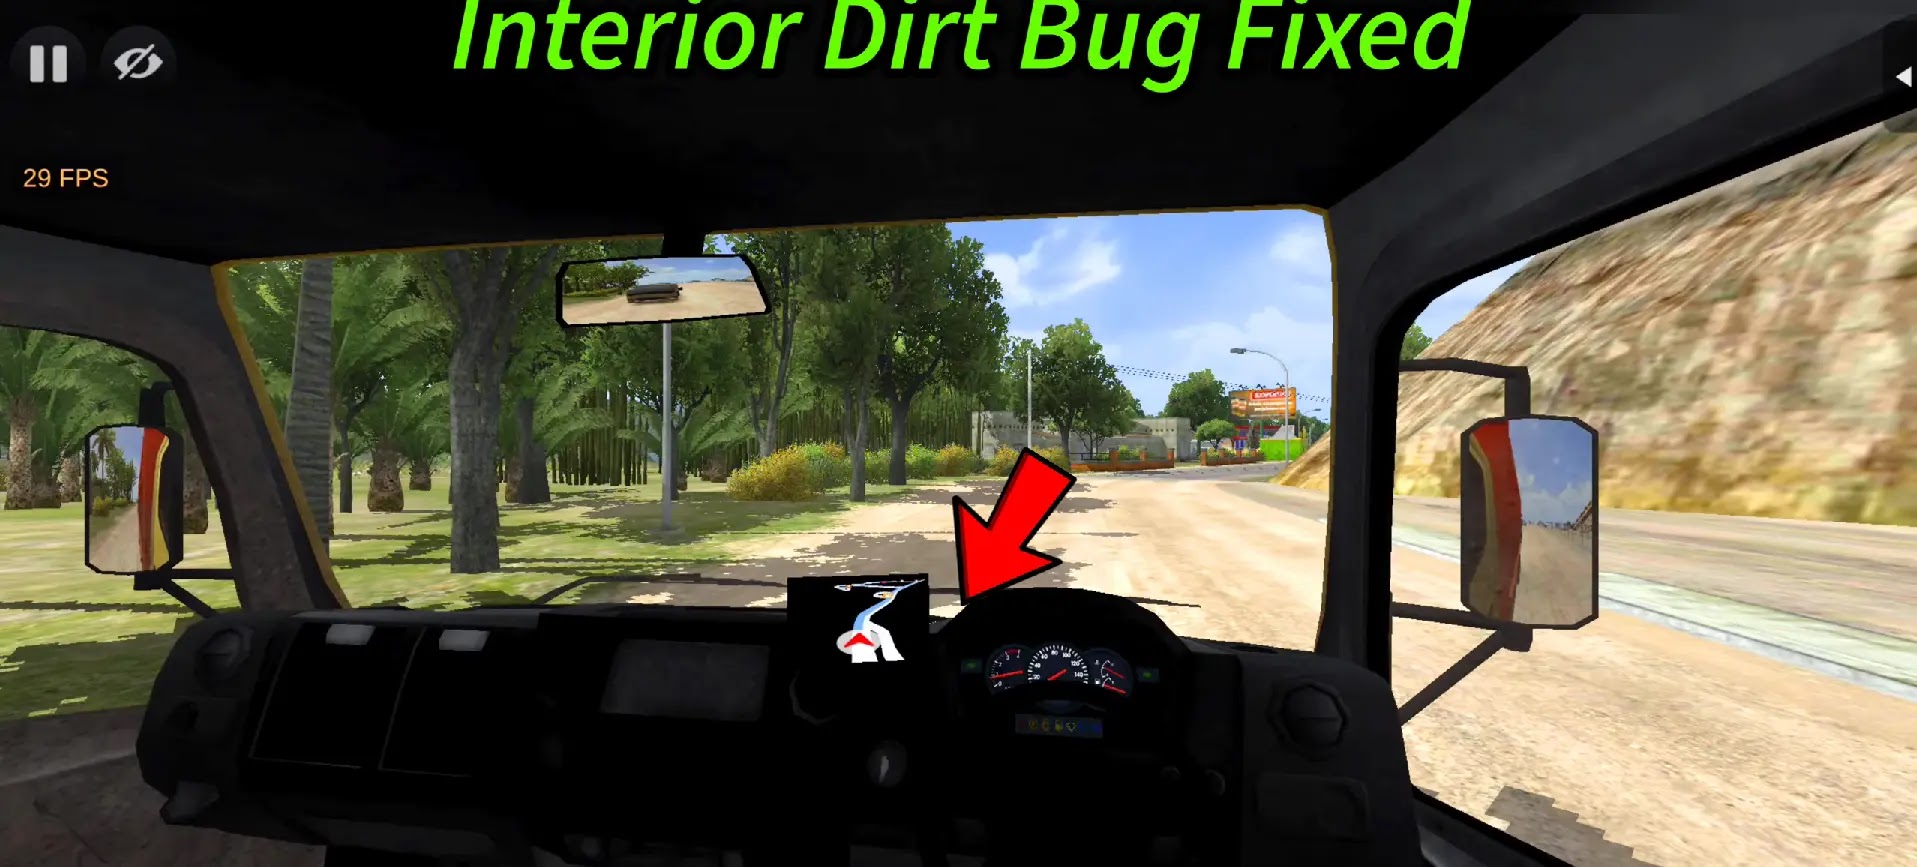 Fix Bug Kabin Kotor di Mod Bussid